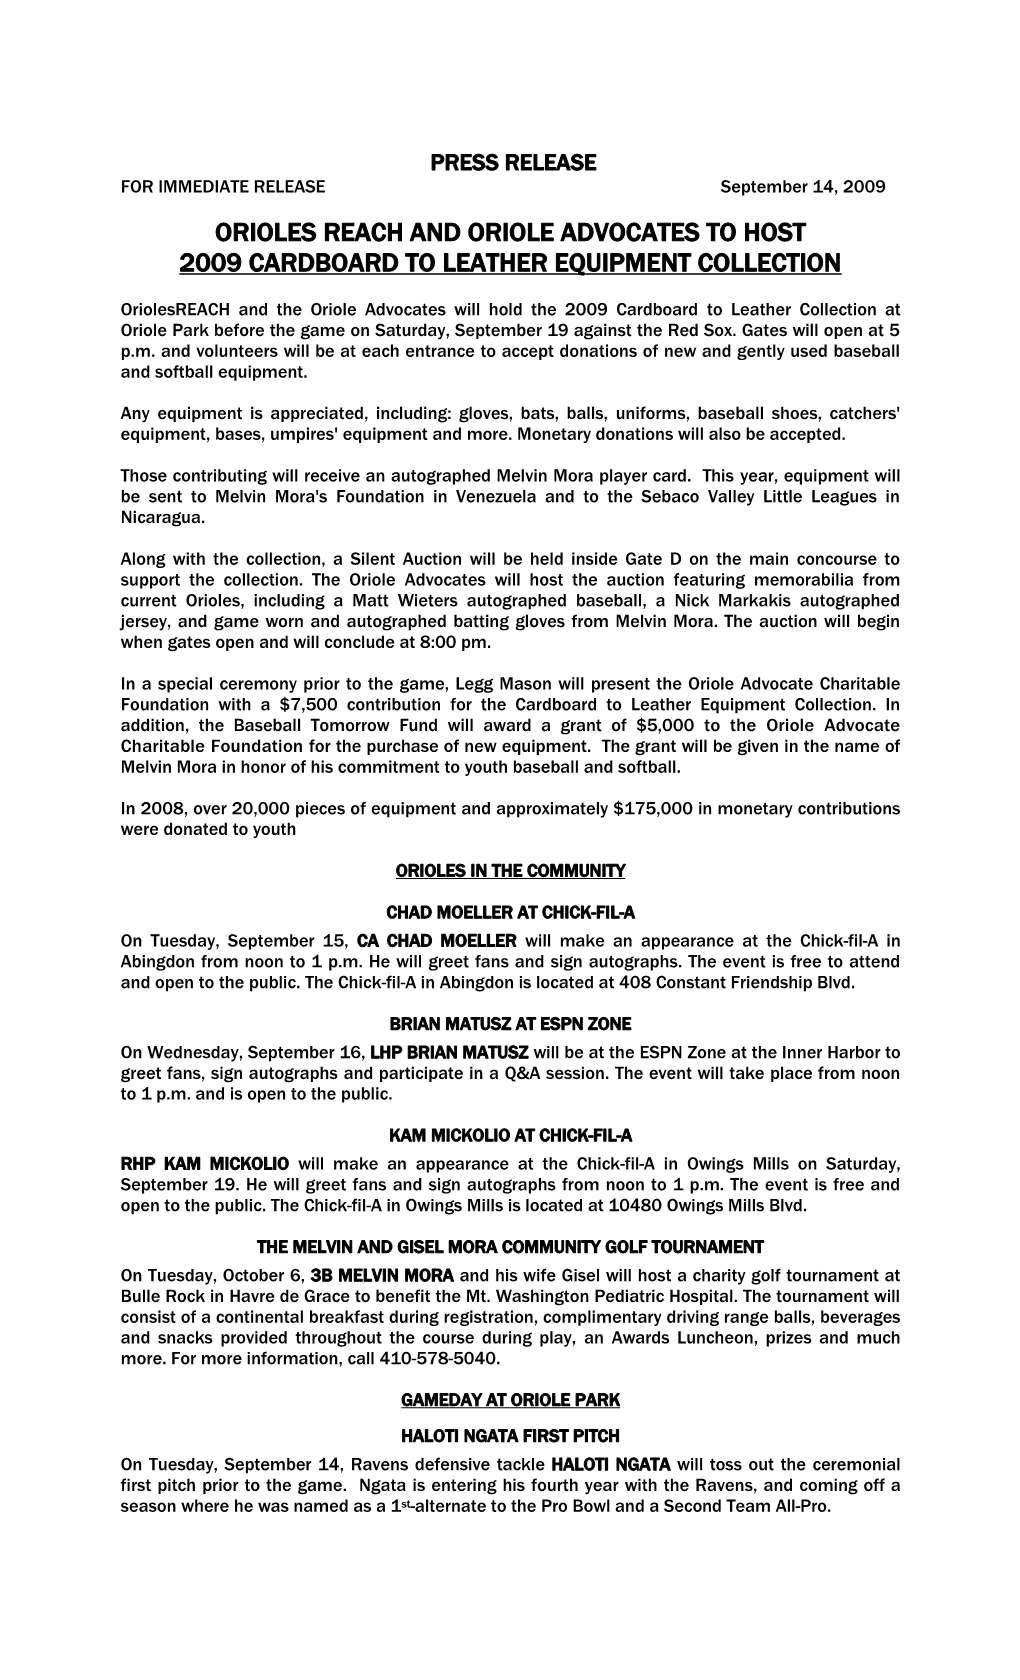 PRESS RELEASE for IMMEDIATE RELEASE September 14, 2009